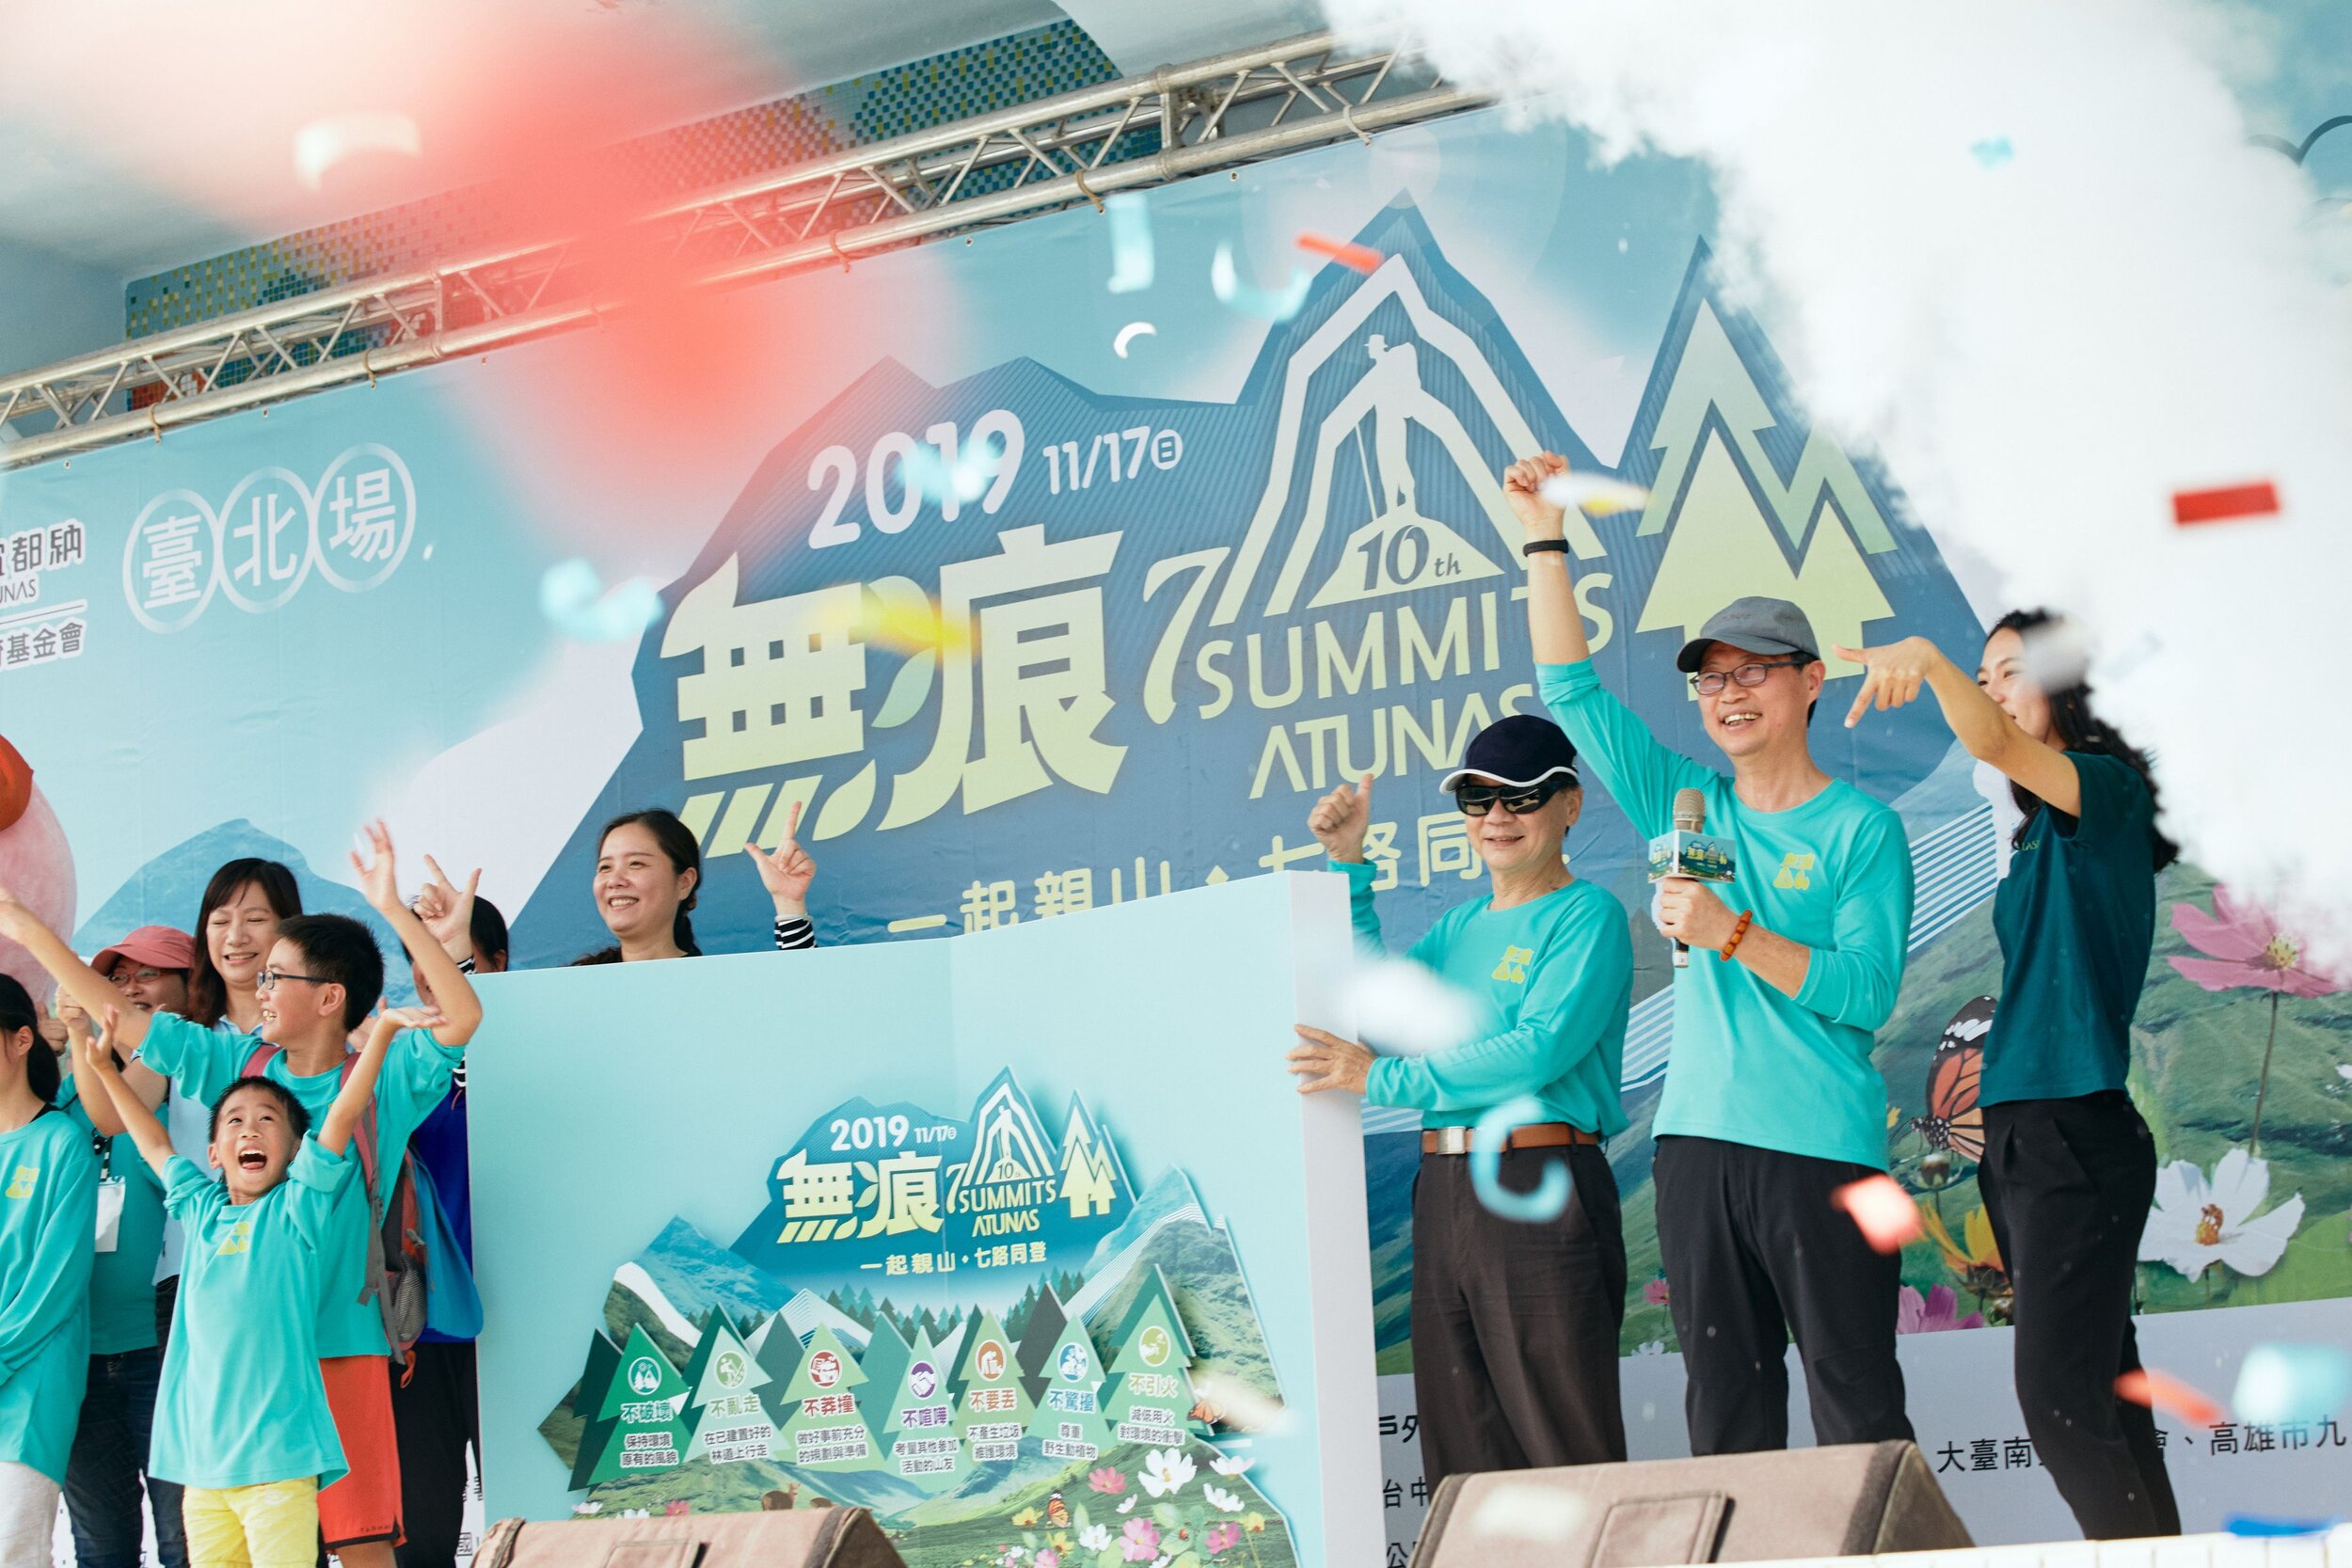 20191117-events-atunas-hiking-taipei-歐都納-無痕山林-永春高中-台北場_58.jpg